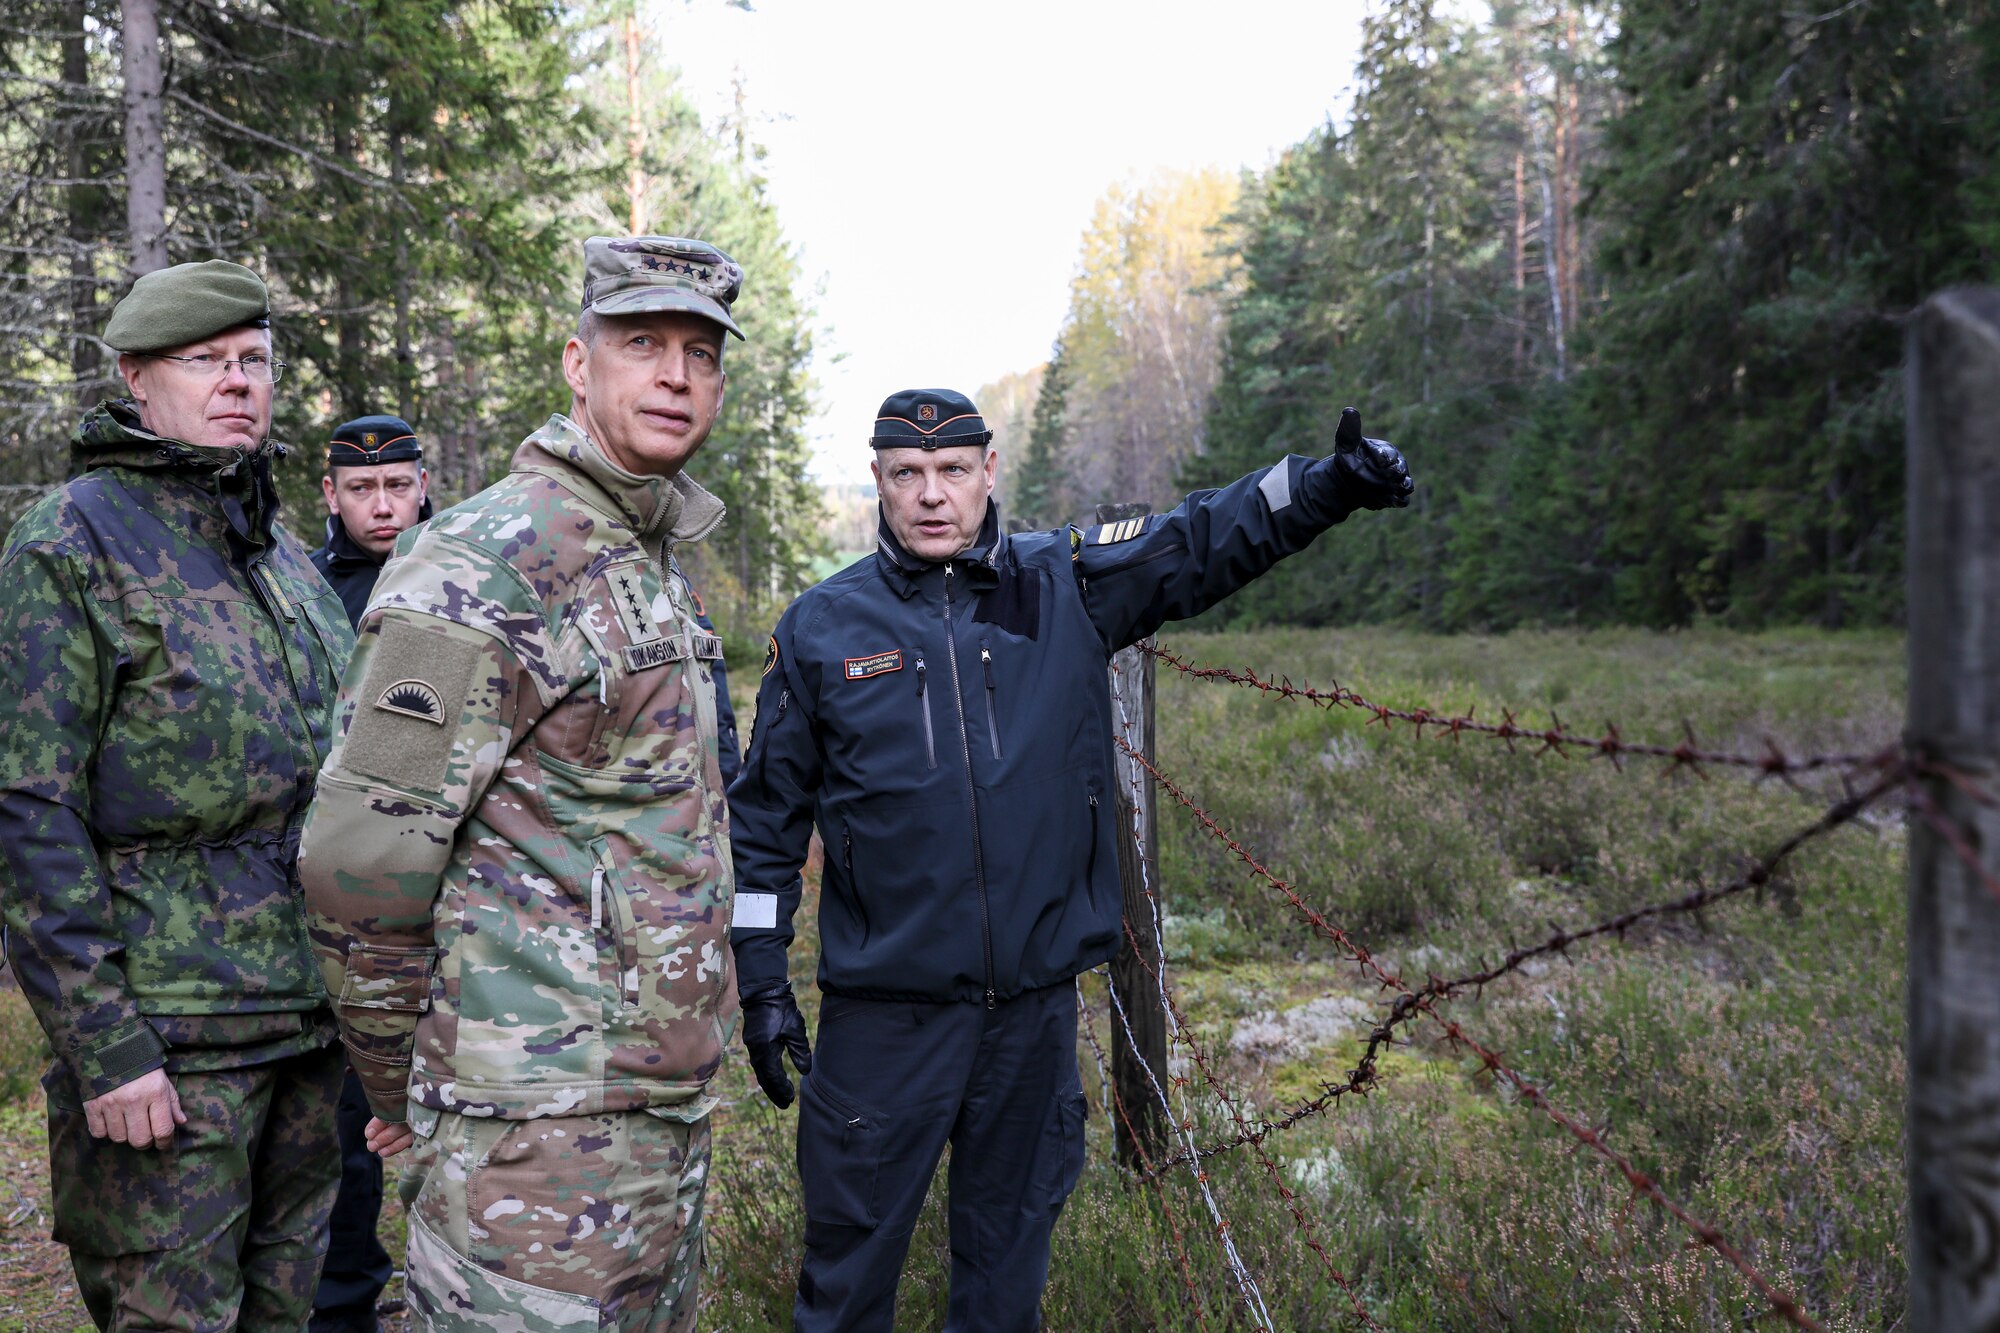 Army Gen. Daniel Hokanson, chief, National Guard Bureau, and Lt. Gen. Vesa Virtanen, chief of Defense Command, Finnish Defense Forces, meet with Col. Mika Rytkonen, commander of Finland’s South-Eastern Border Guard District, near Vaalimaa, Finland, Oct. 13, 2023.